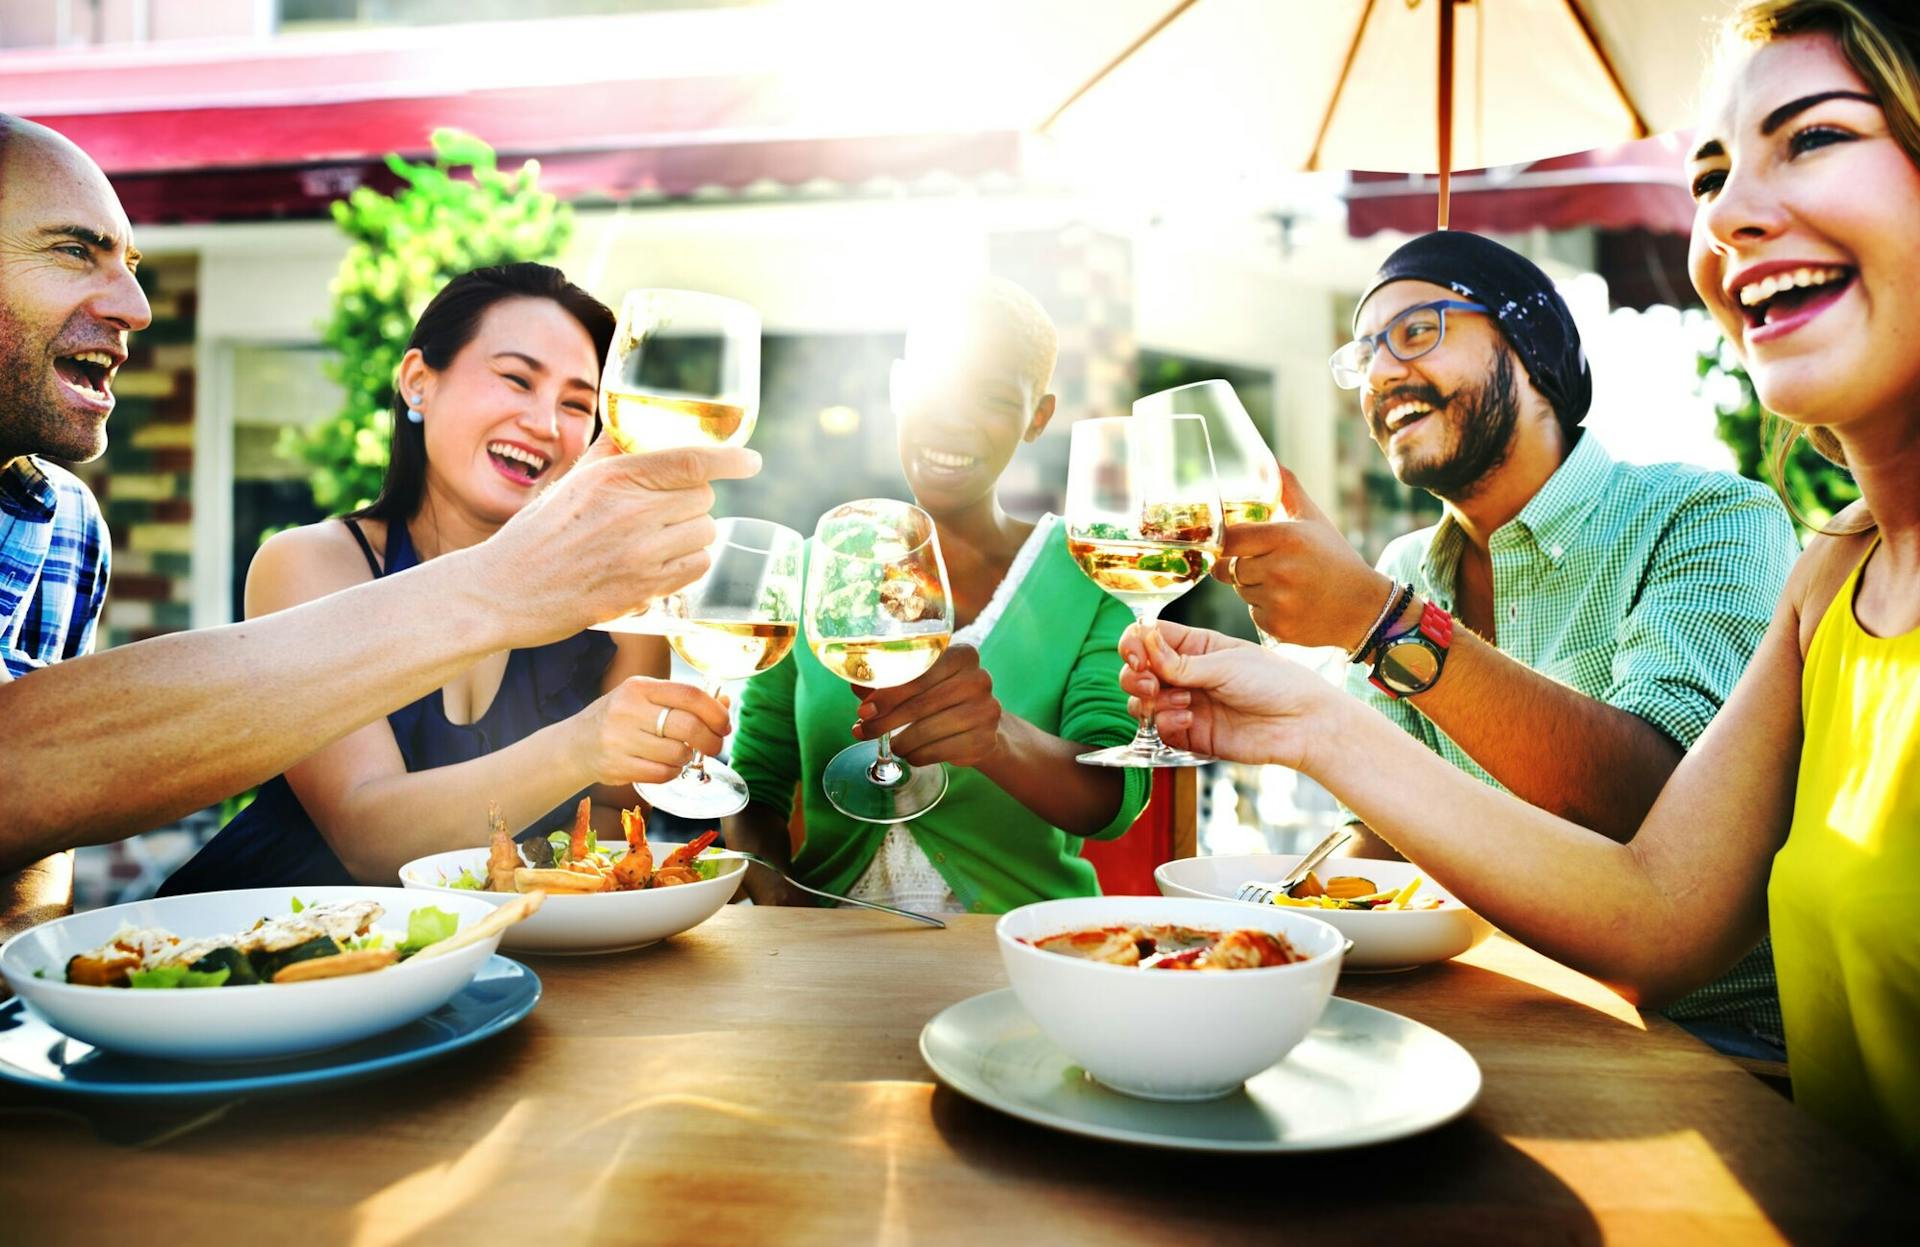 Singapore Restaurant Marketing Guide: 5 Customer Profiles Revealed